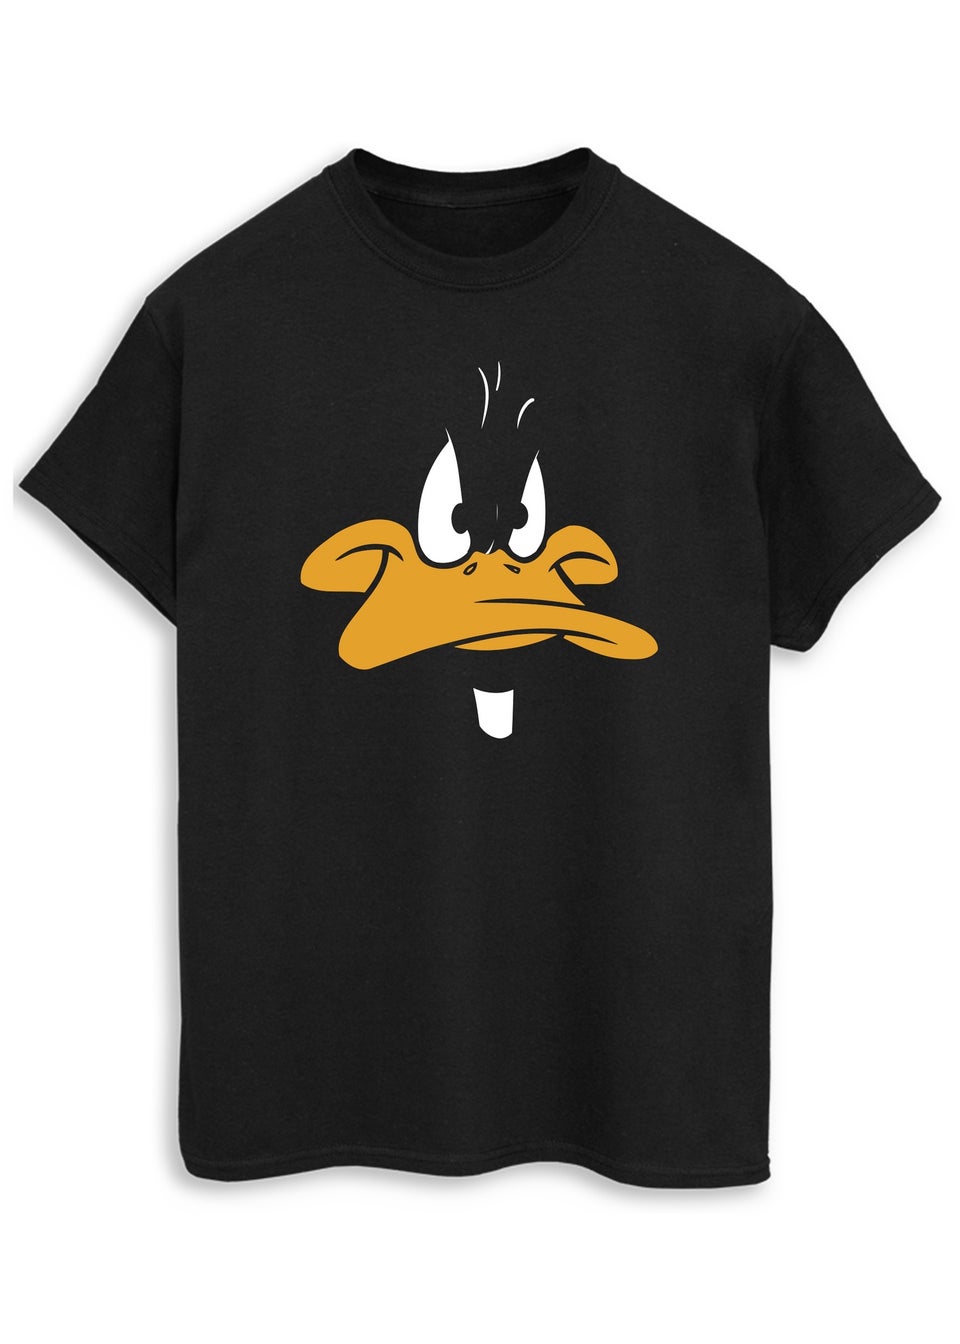 Looney Tunes Daffy Duck Big Face Black Printed T-Shirt